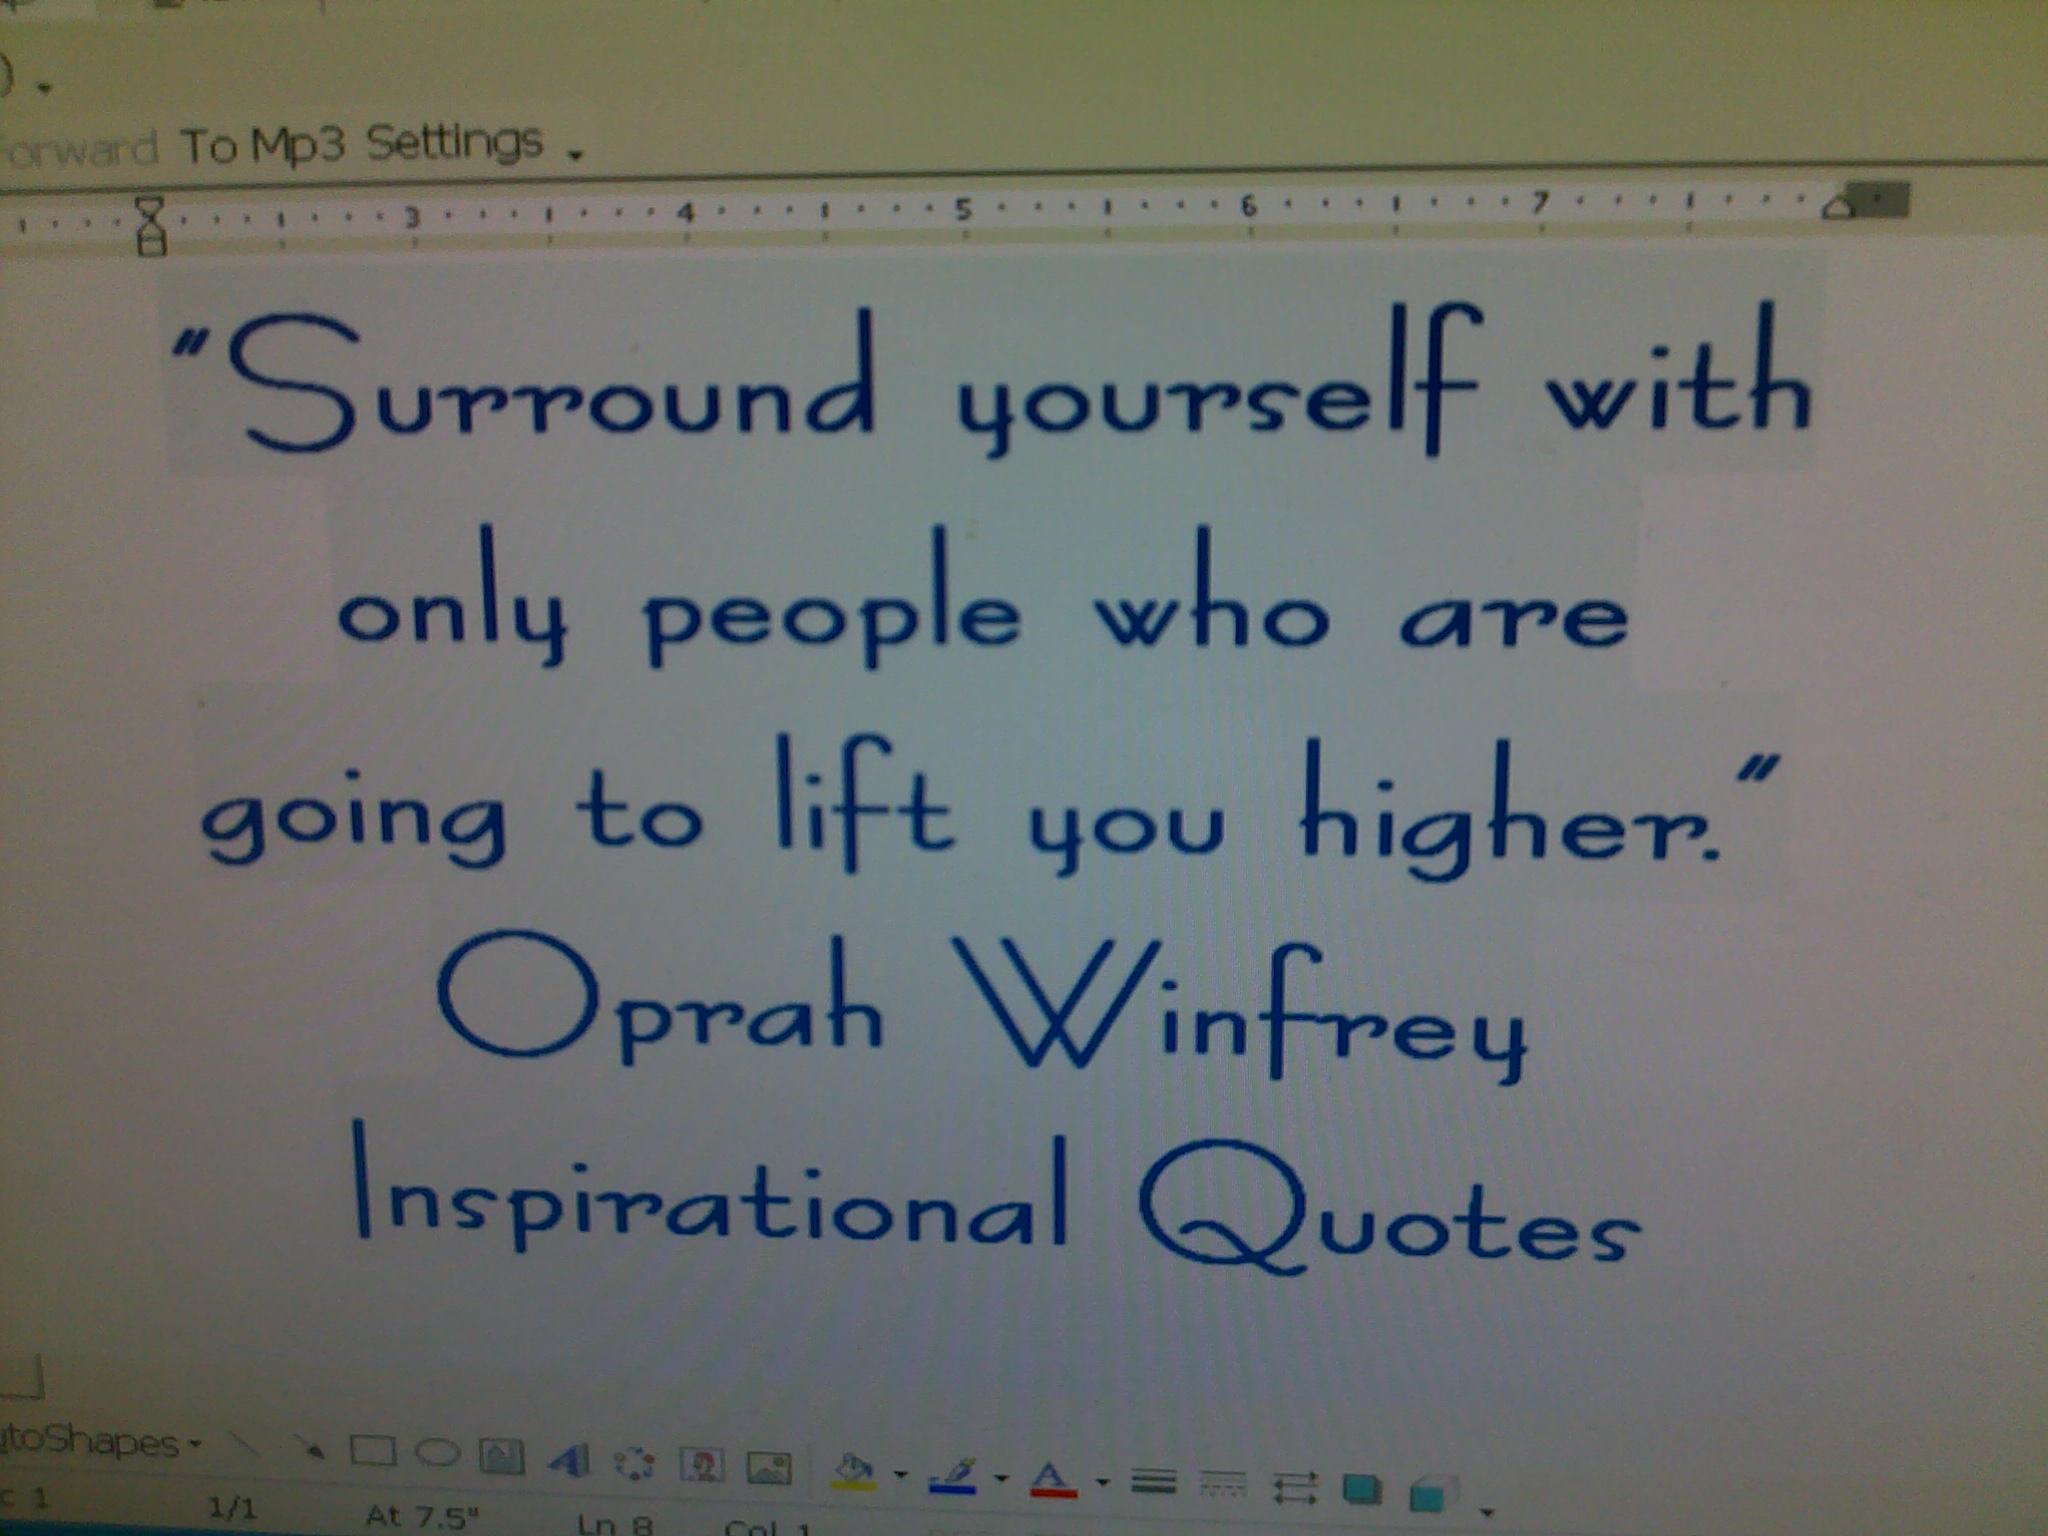 Positive Quotes Oprah Winfrey. QuotesGram